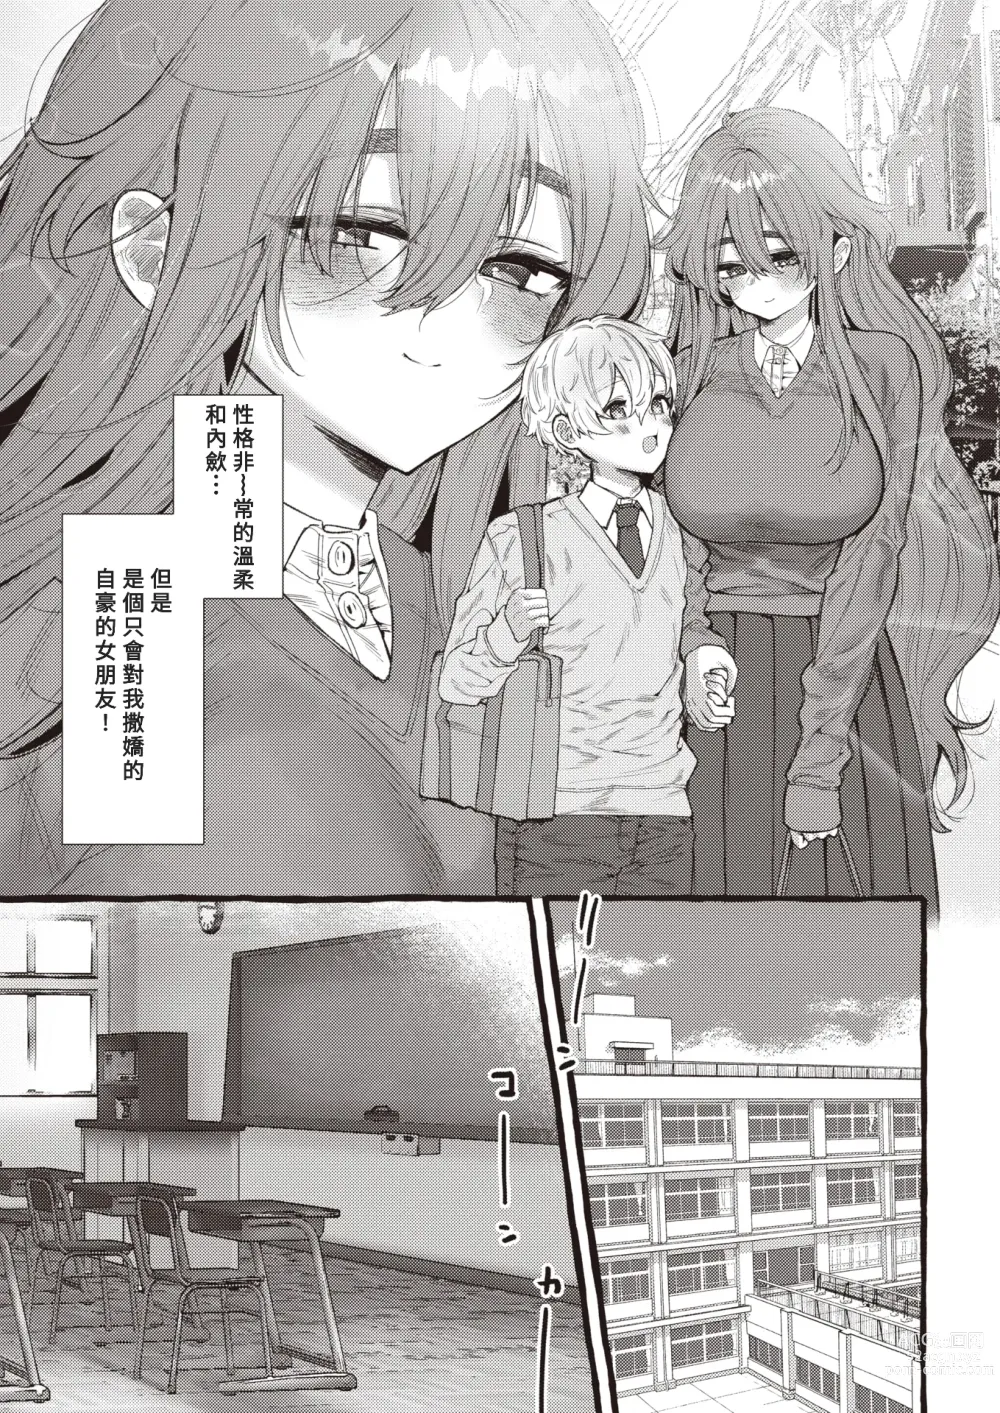 Page 5 of manga ZOO-Kei Joshi@ karasu